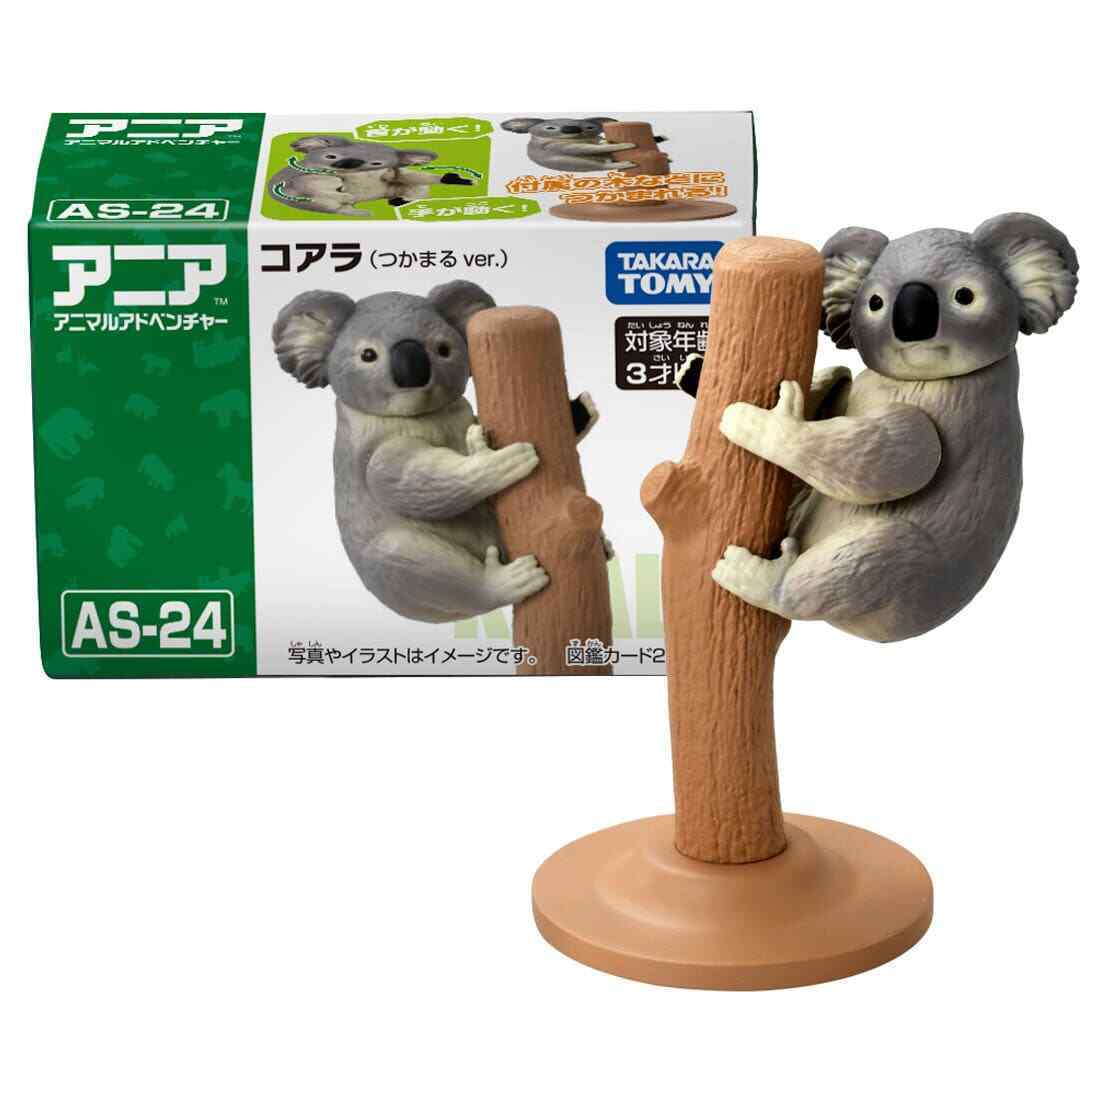 Takara Tomy ANIA animal Action Mini Figure -  AS-24 Koala (Grabbing Ver.)